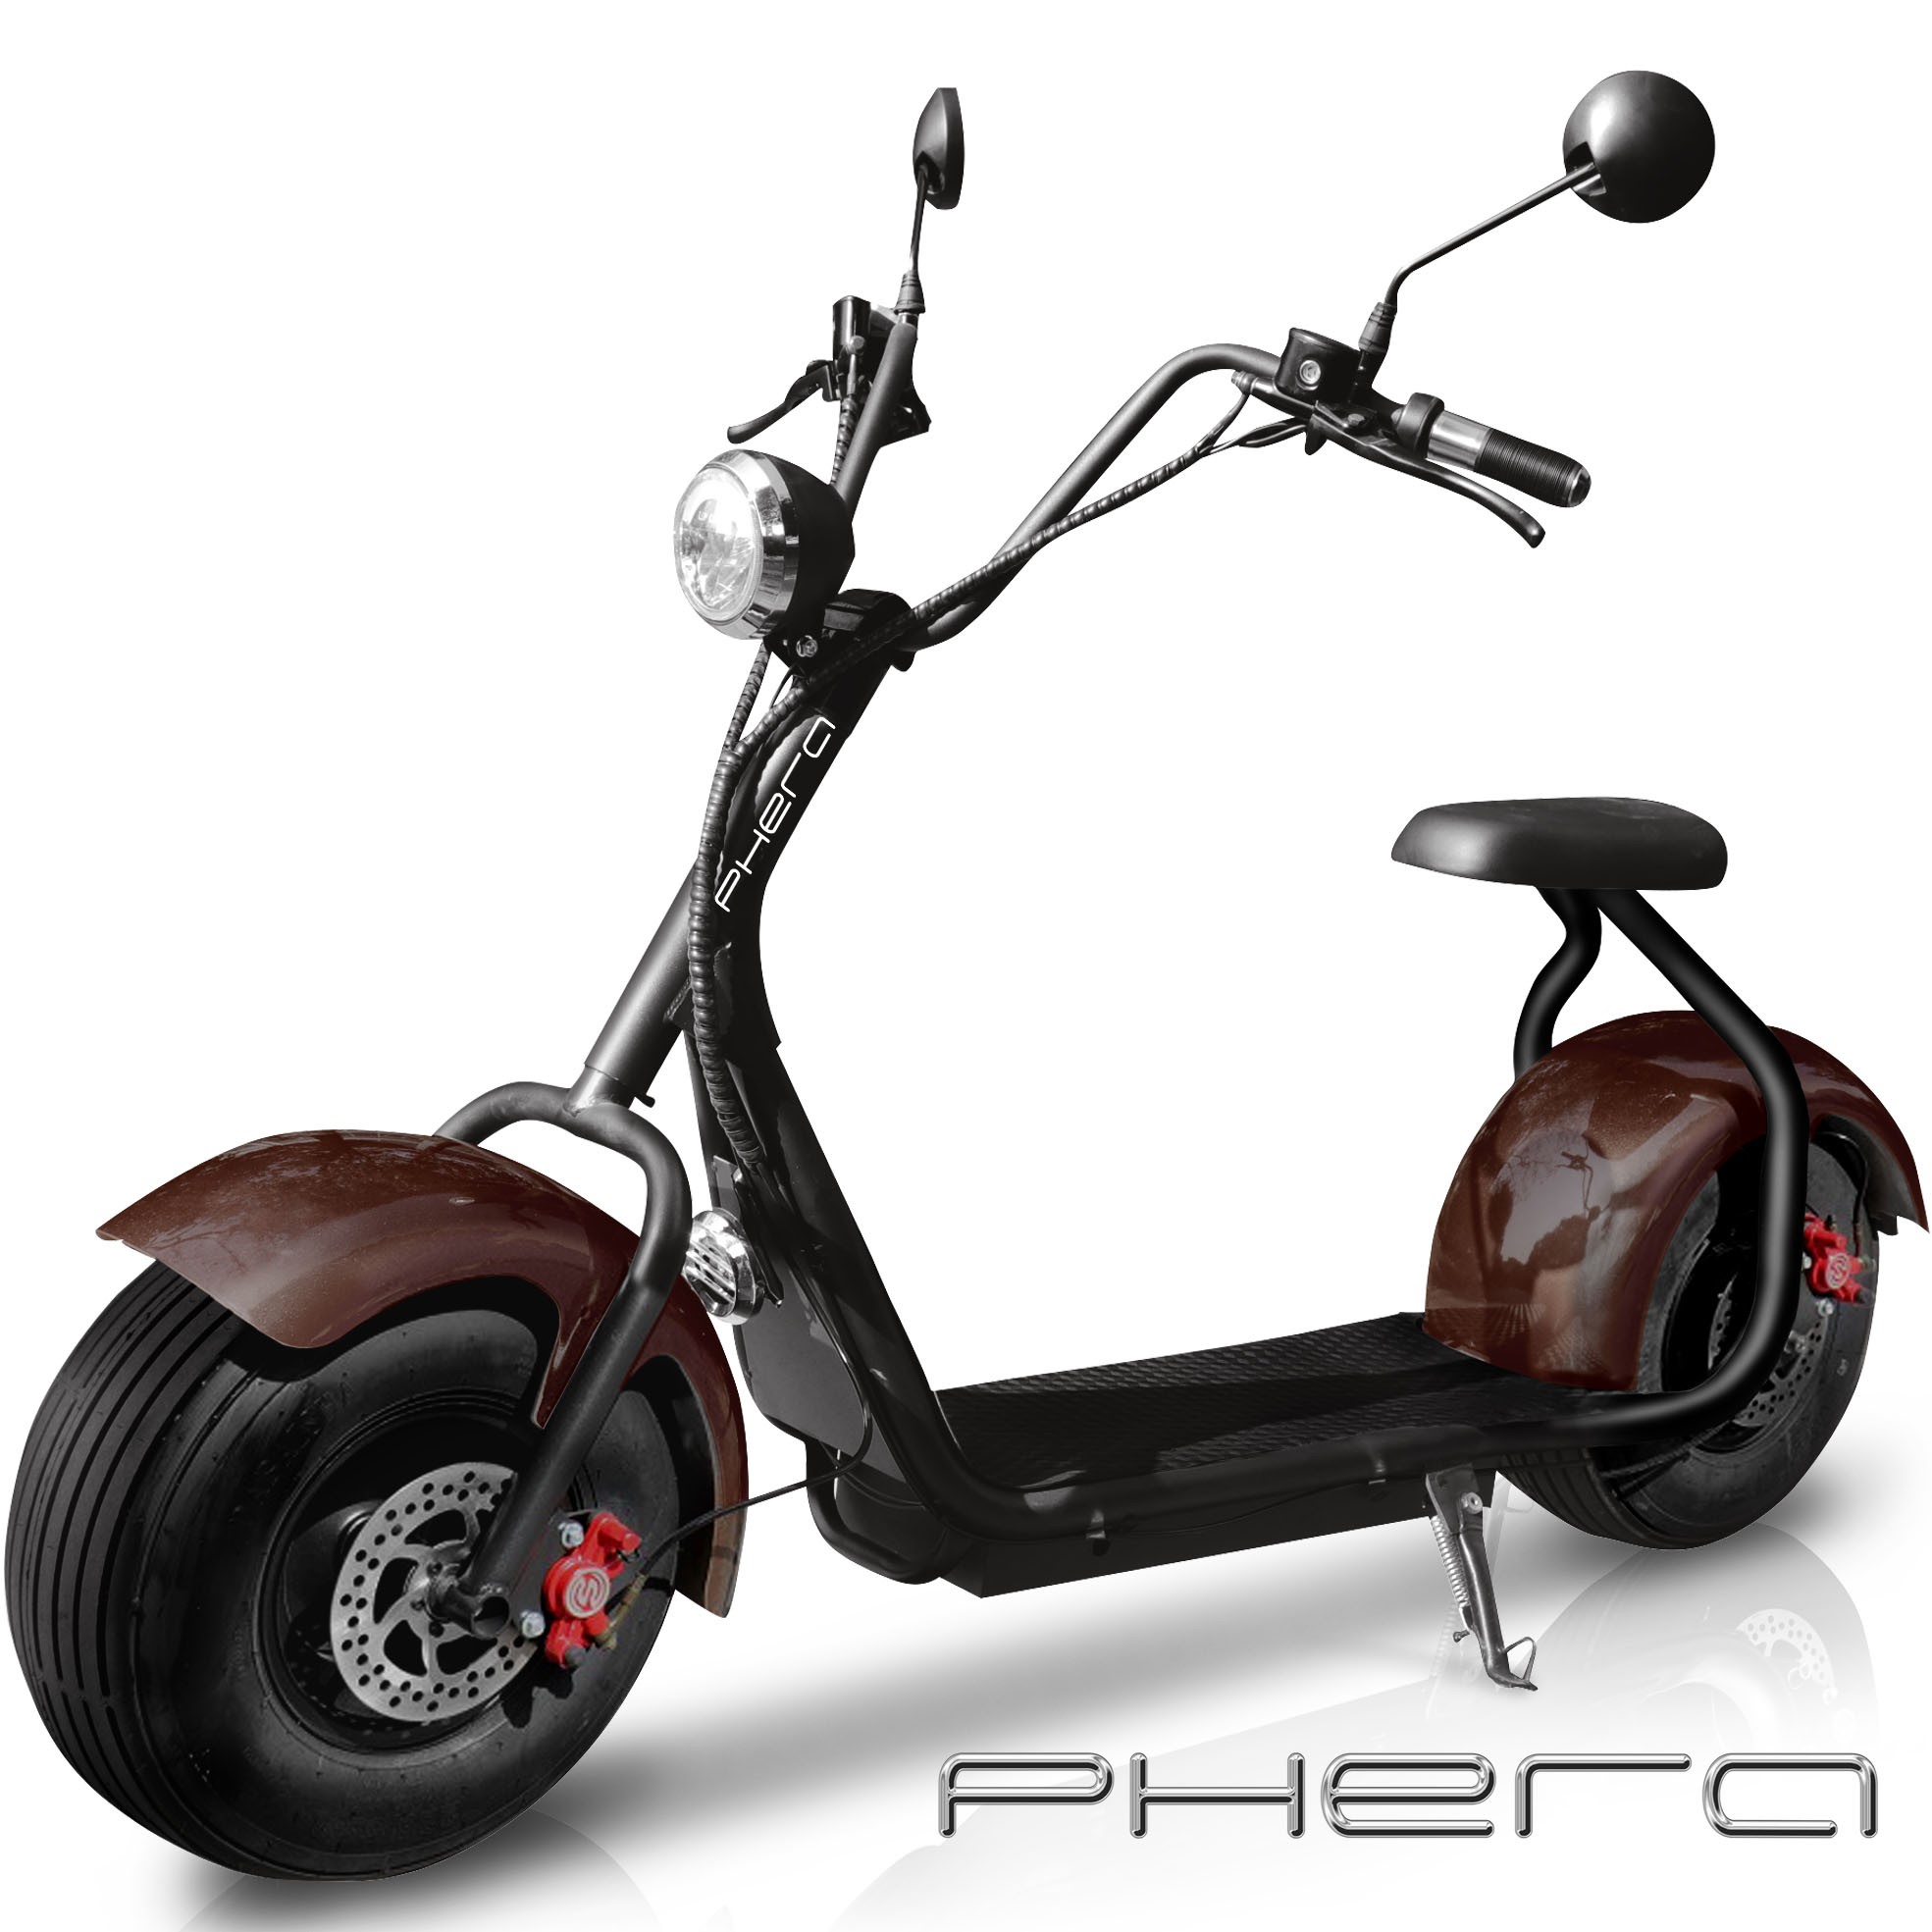 Moto Elétrica Scooter Phera F300 1500w 45kmh max180kg -= PROMOCAO ÚNICA -=-